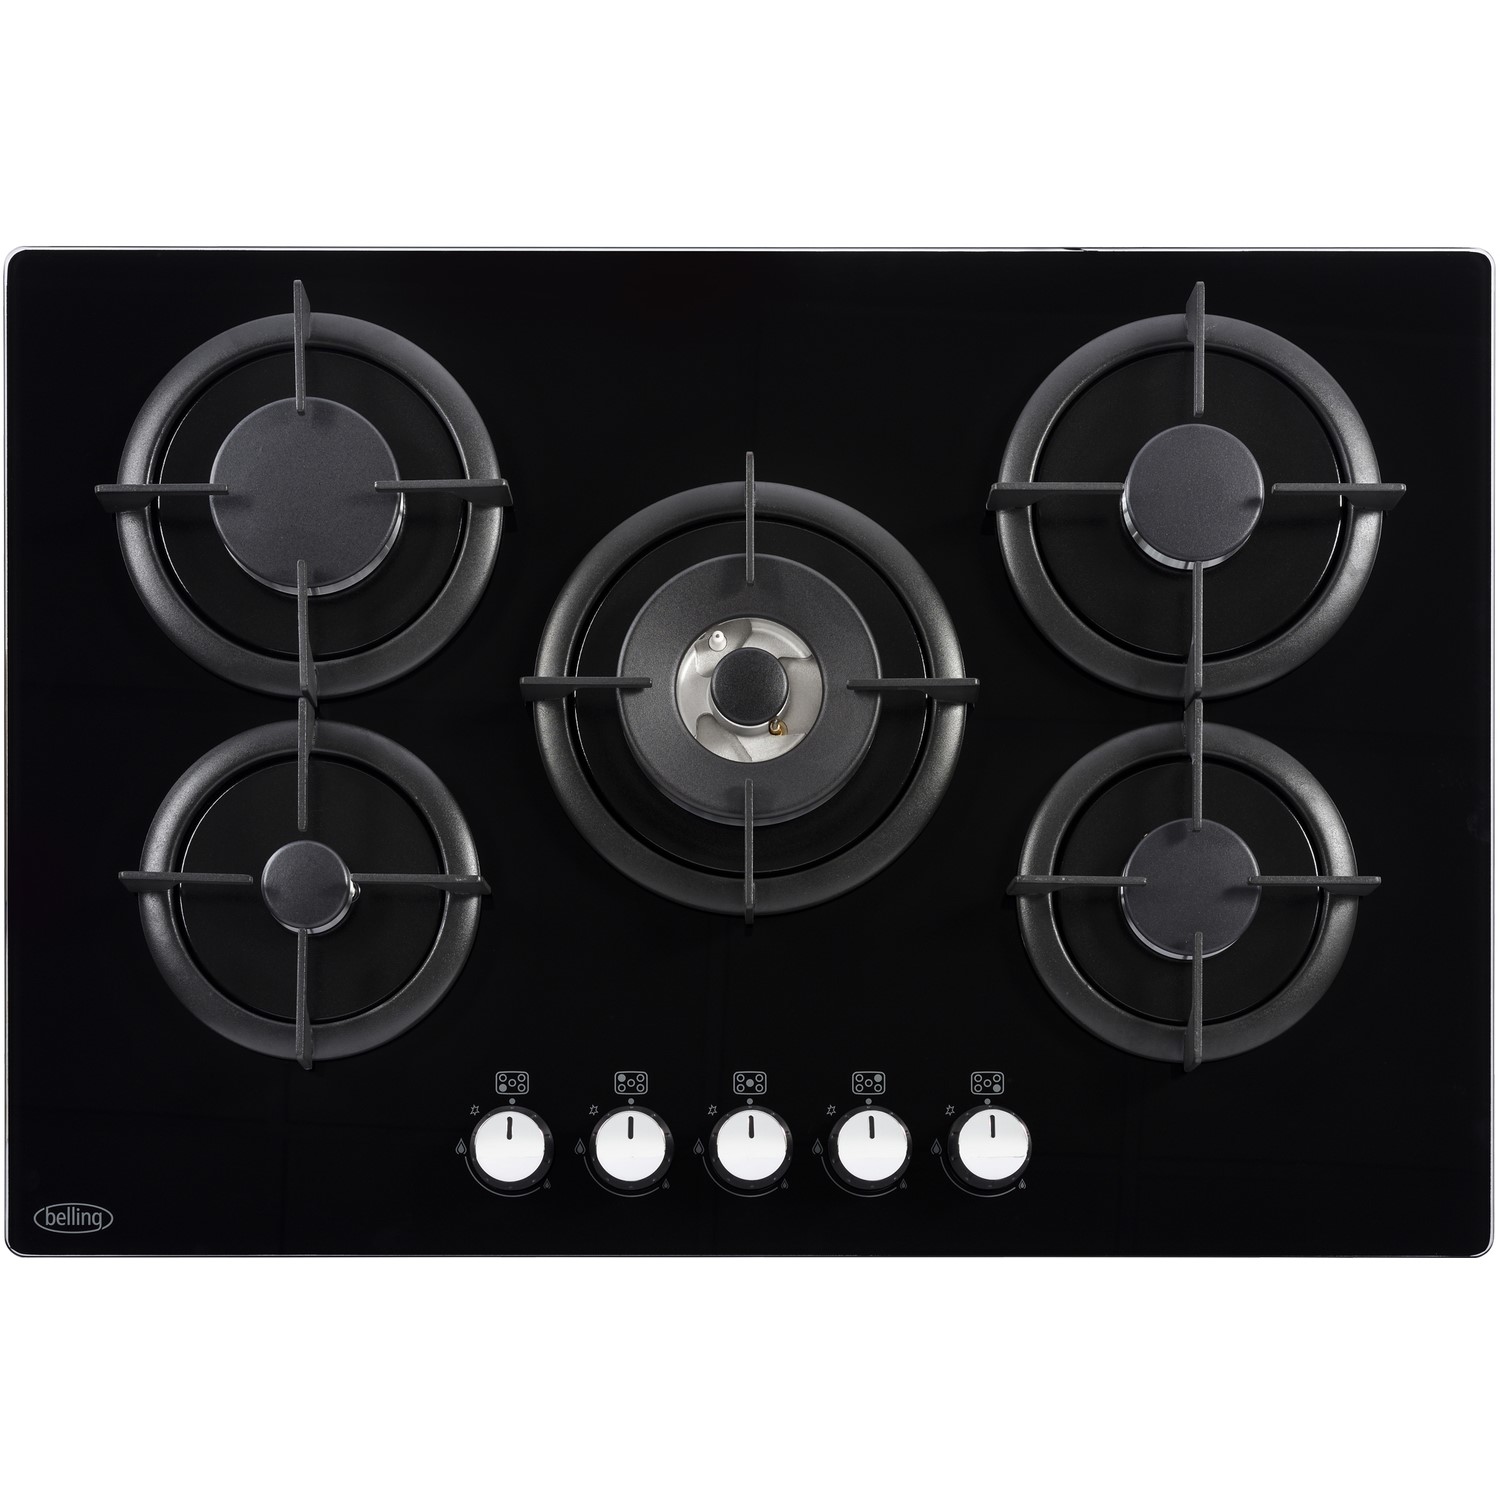 8 x Belling Black Cooker Oven Hob Flame Burner Hotplate Control Switch Knobs 